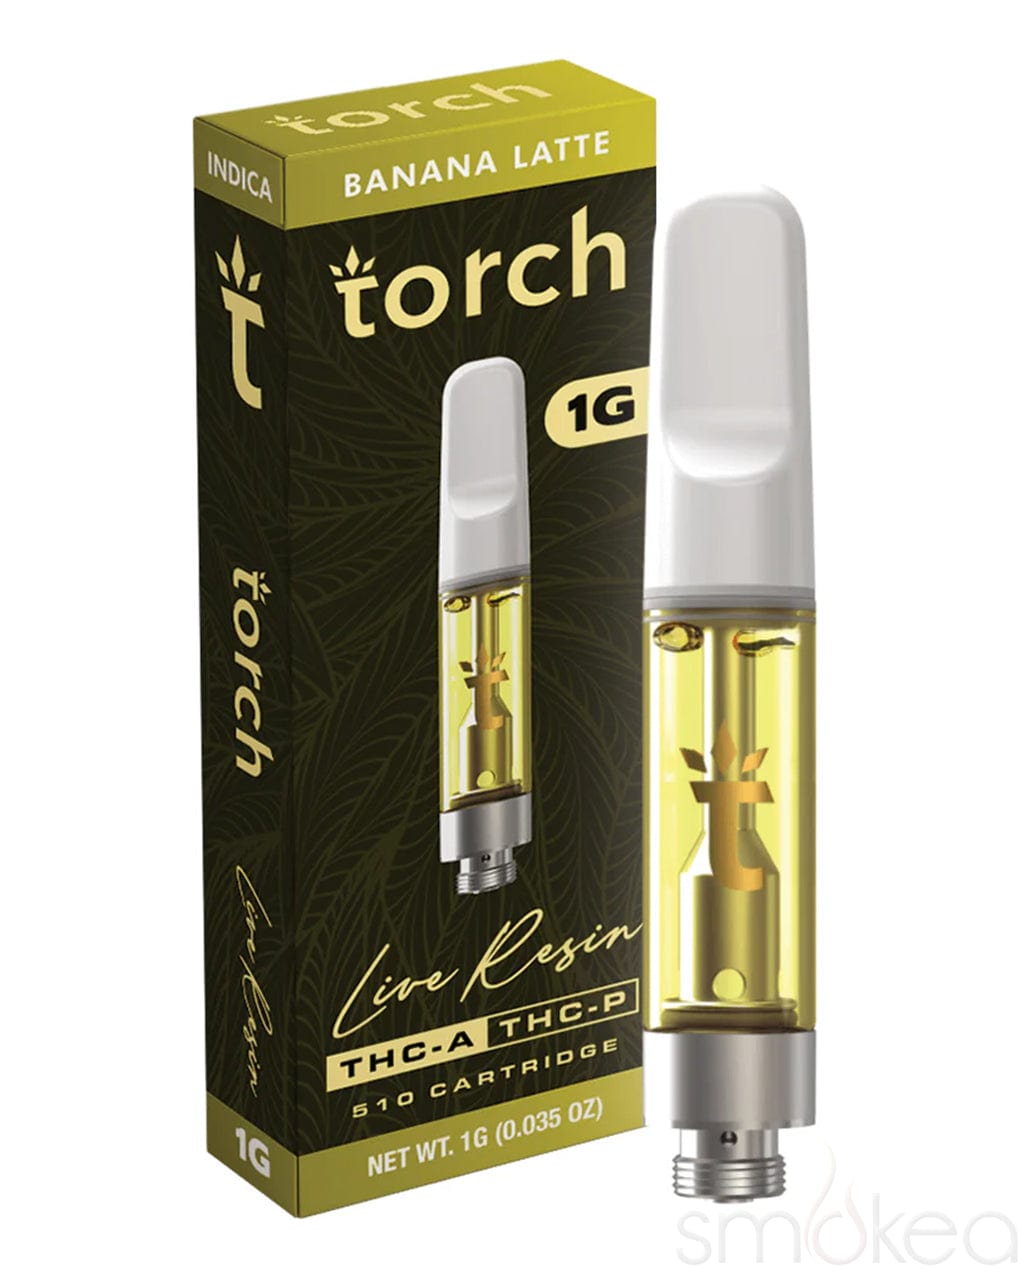 Torch 1g THCA Live Resin Blend Cartridge - Banana Latte